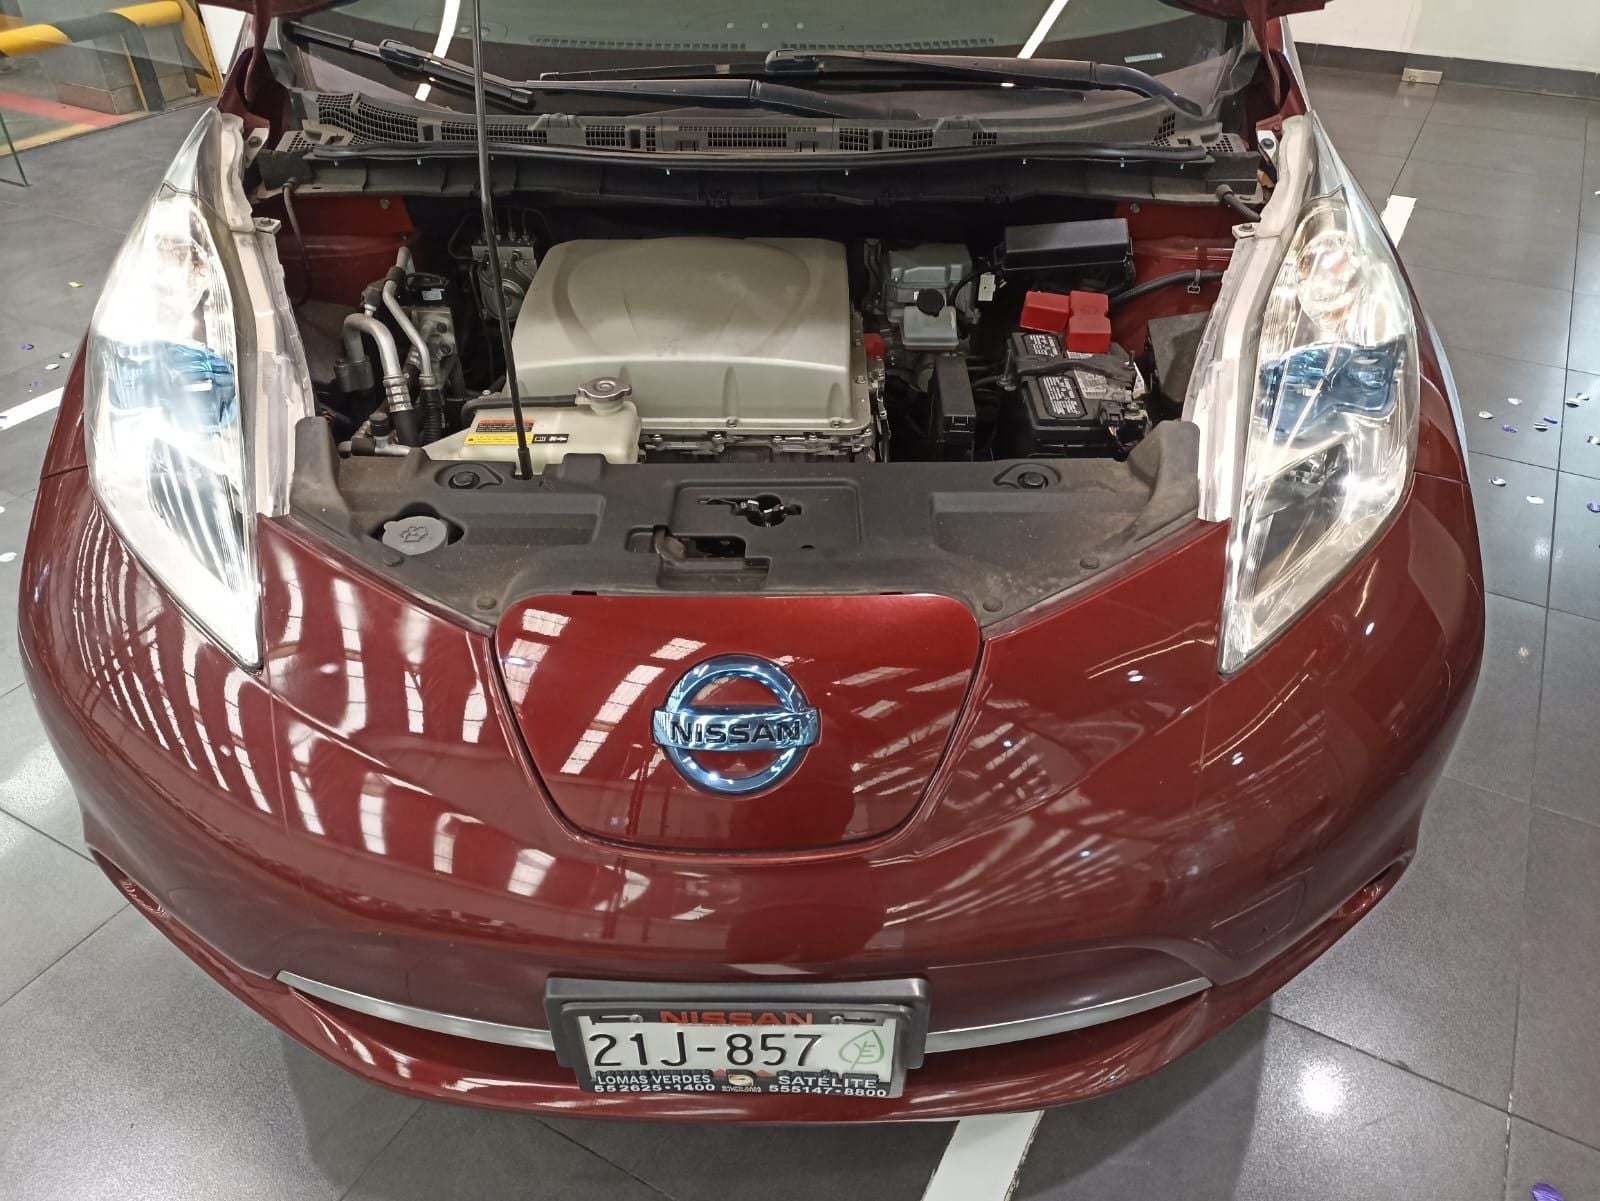 2017 Nissan Leaf Electrico 24 kwh